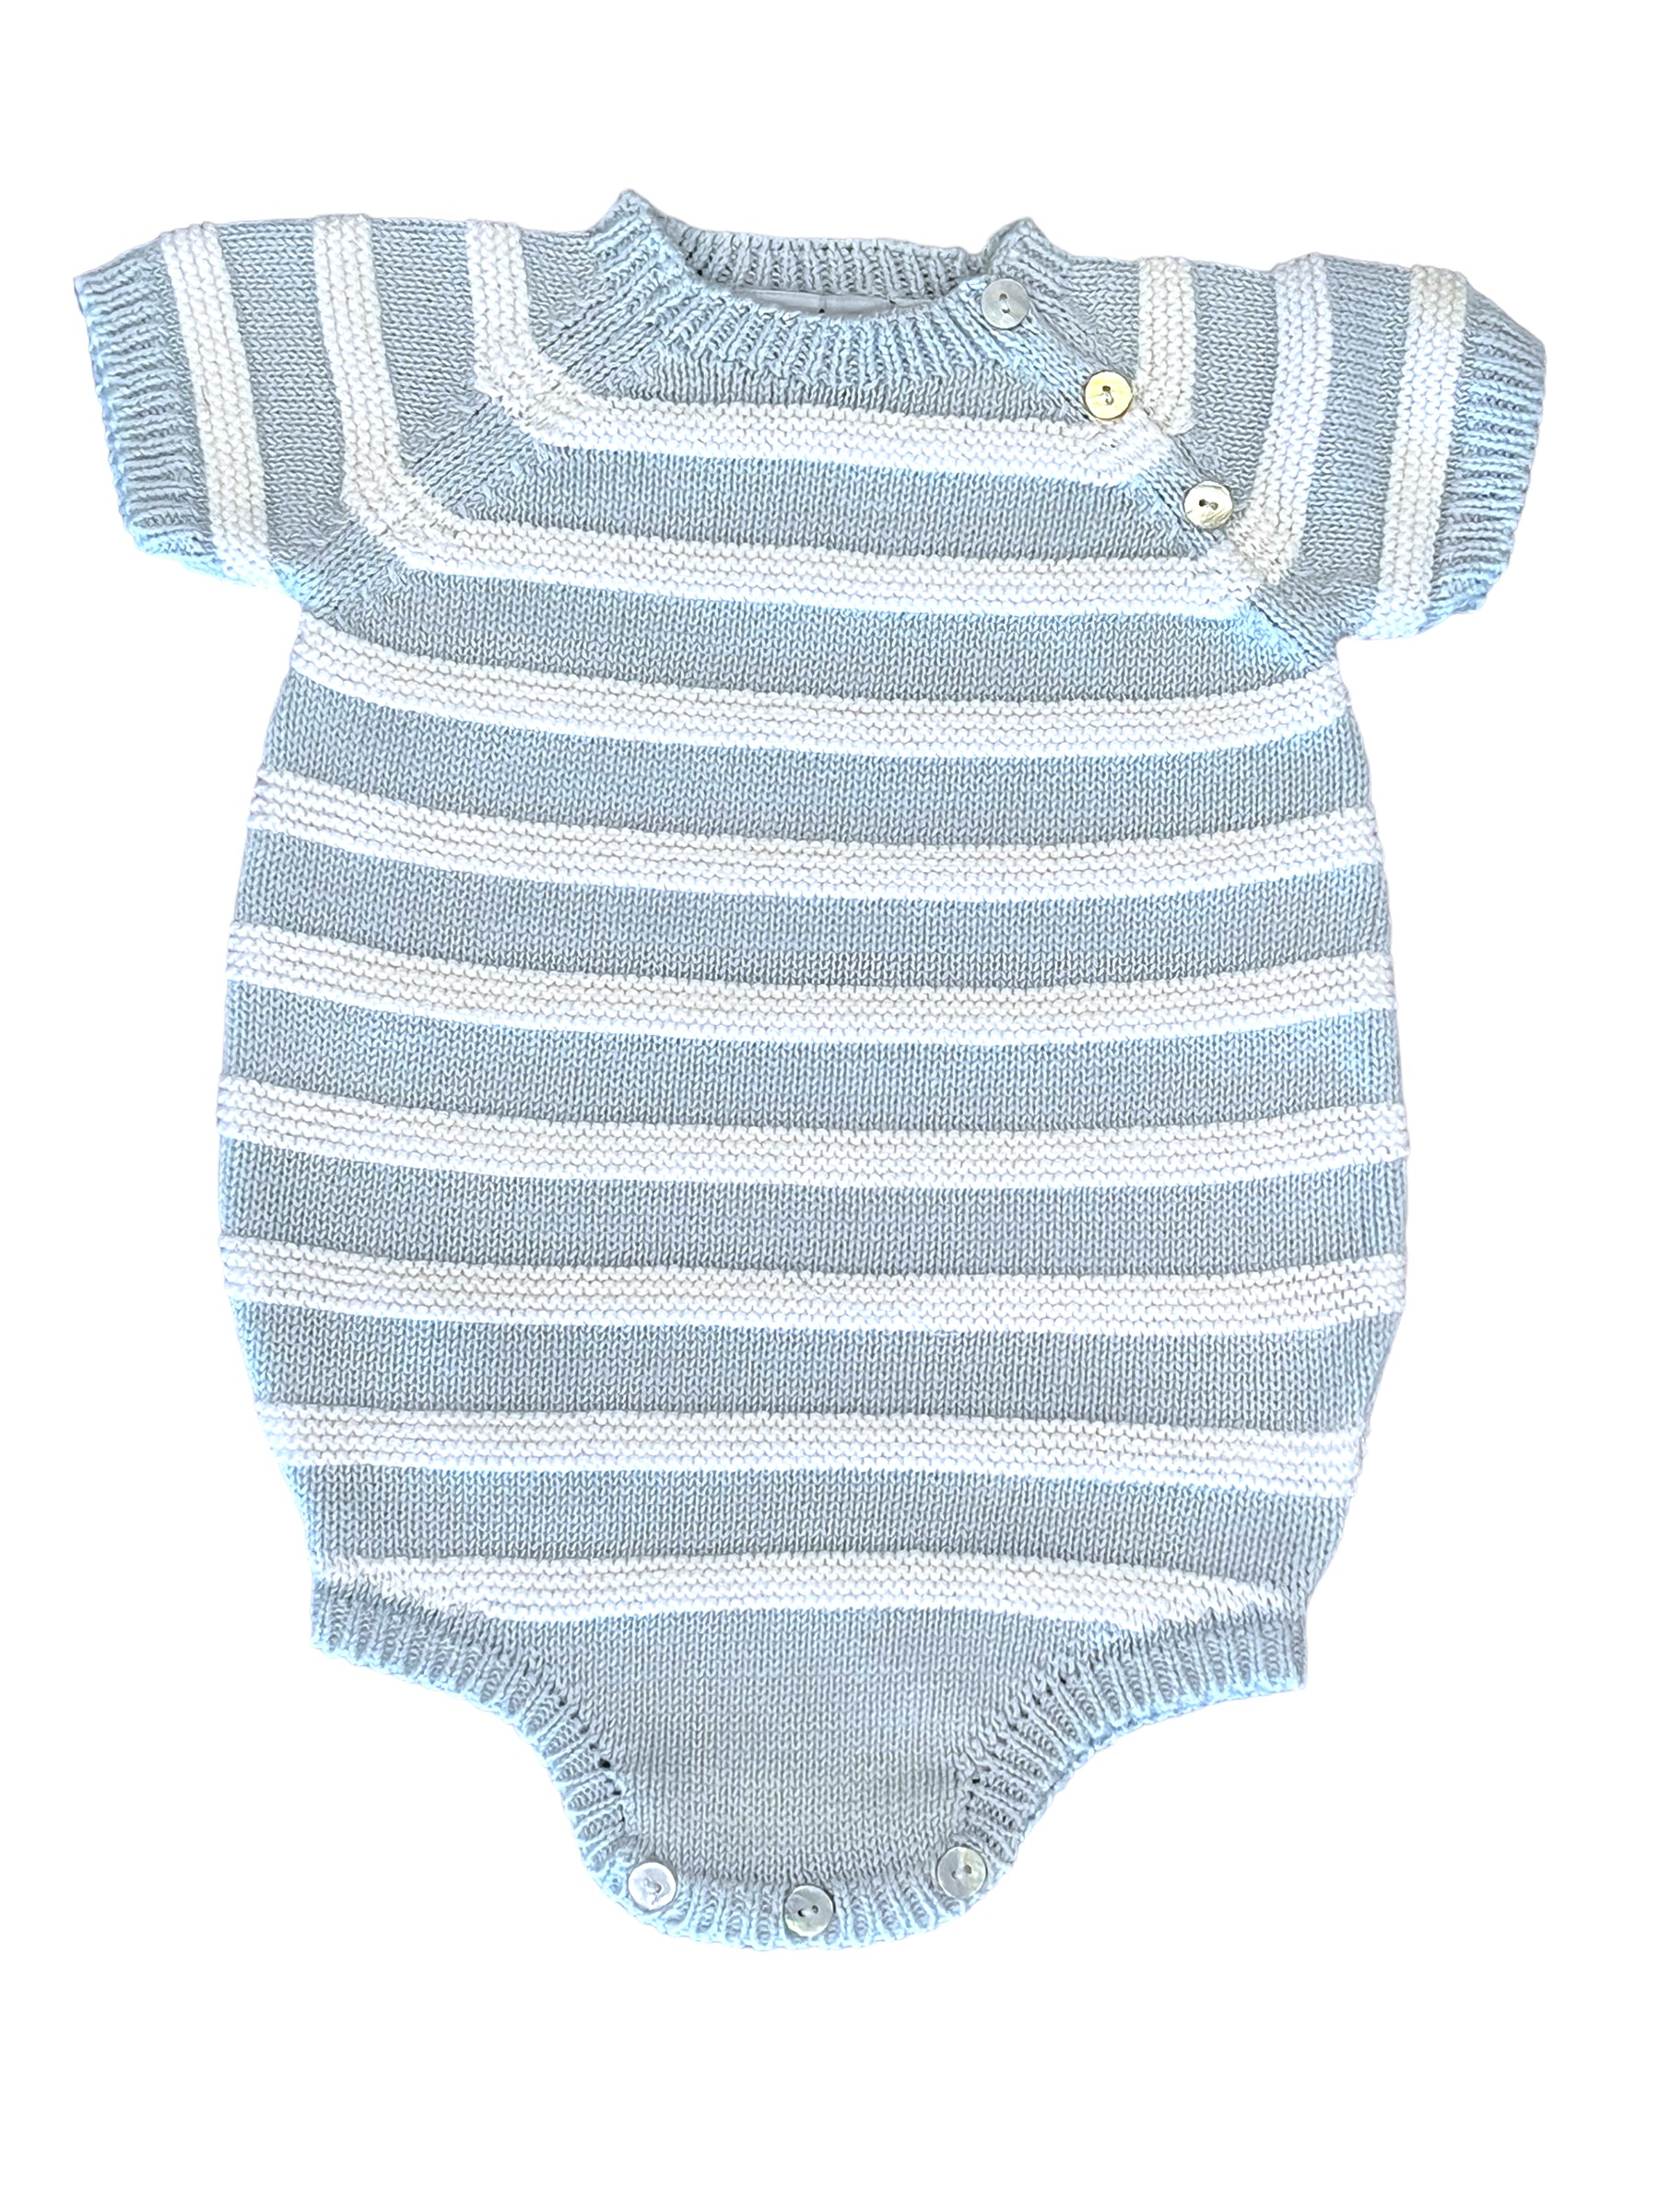 Striped Romper-Blue (Toddler)